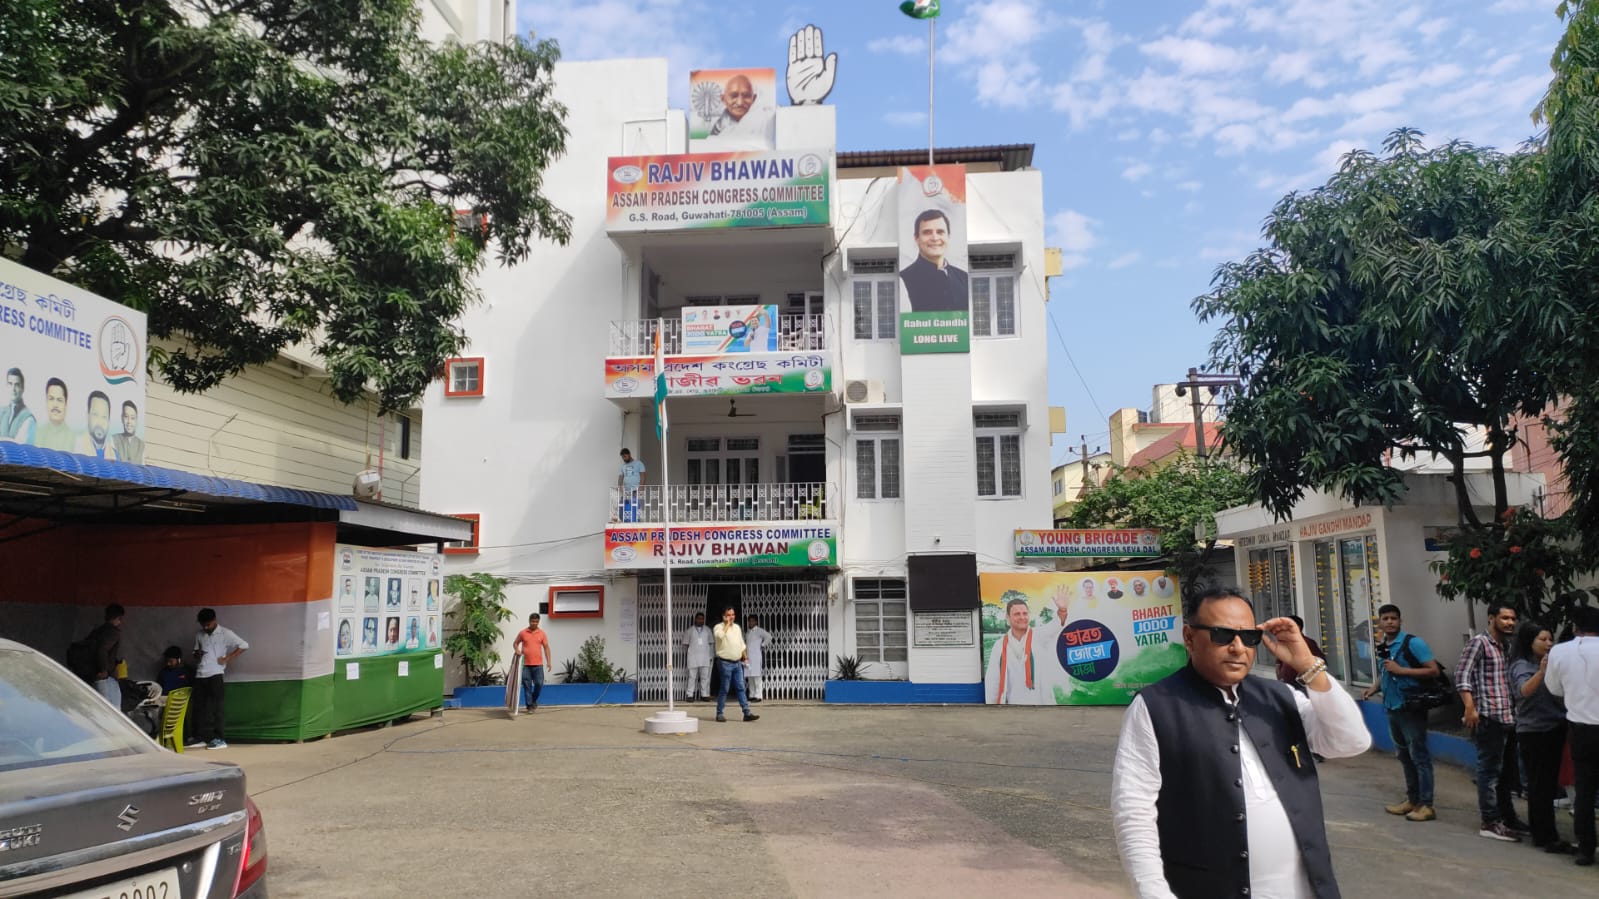 Guwahati: Congress presidential polls underway in Rajiv Bhawan